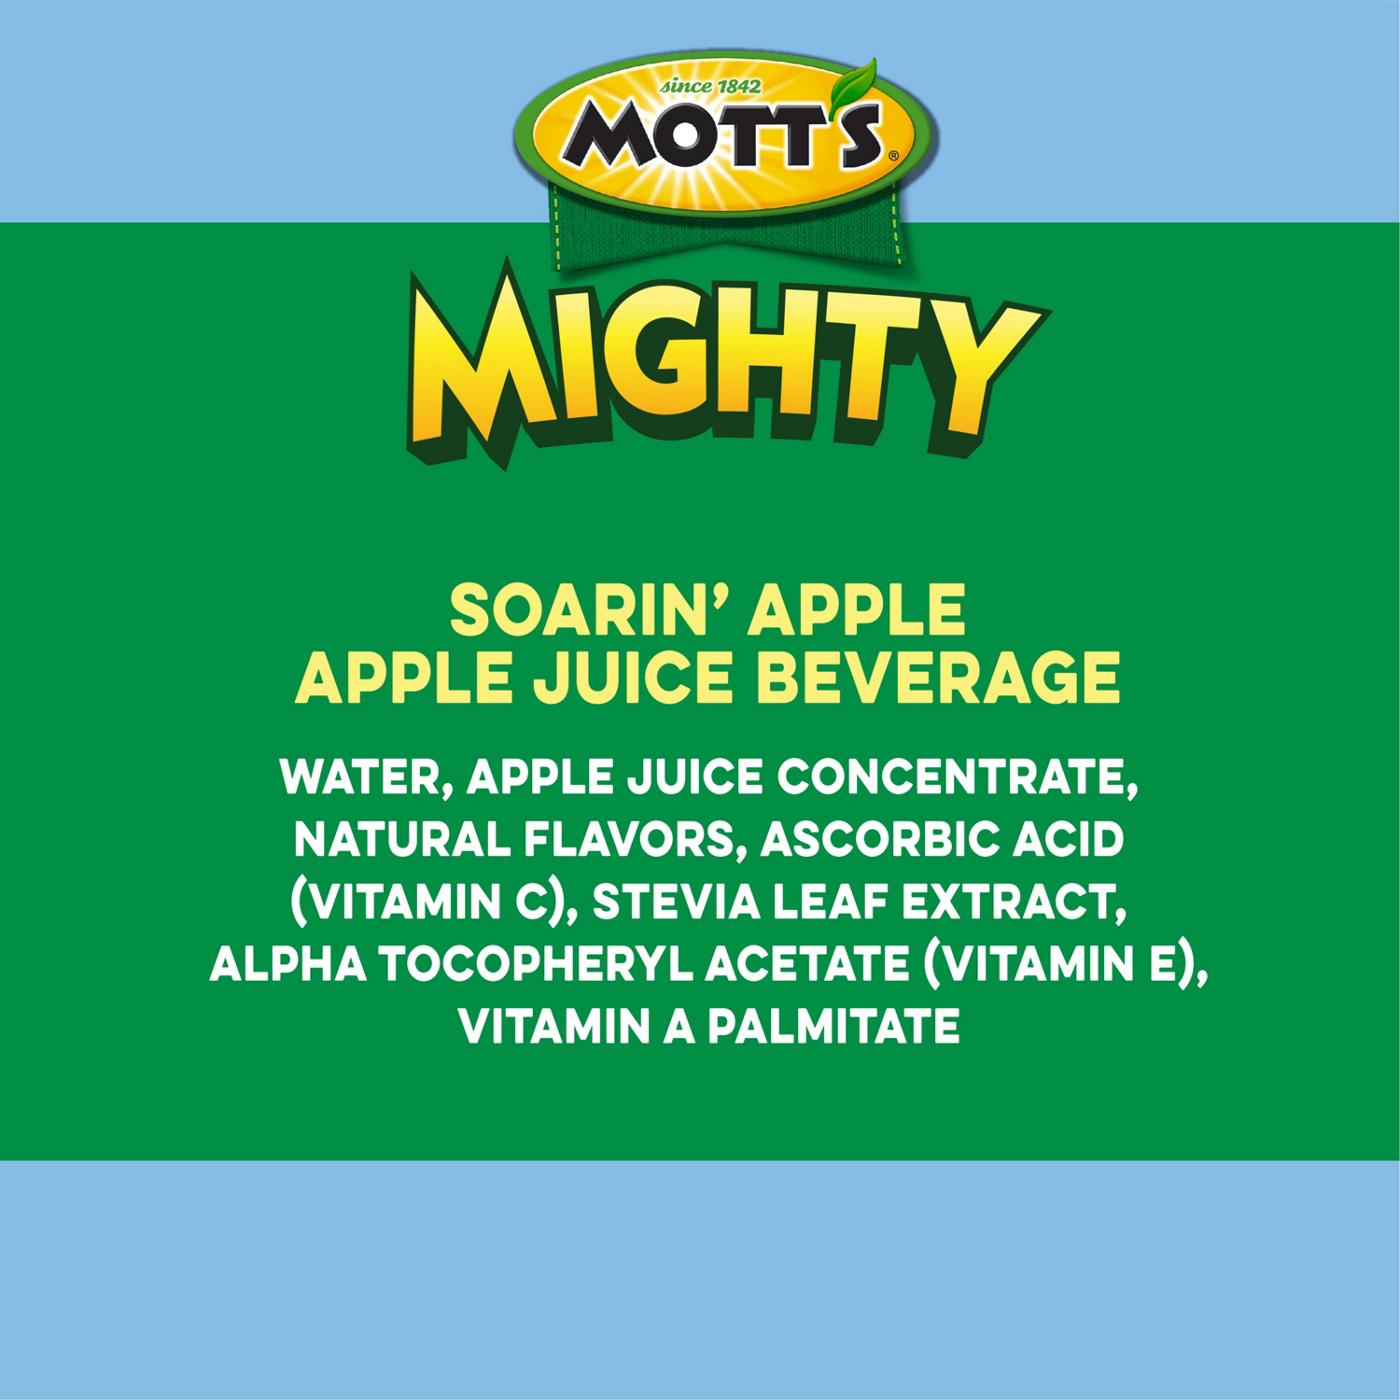 Mott's Mighty Soarin' Apple Juice; image 4 of 5